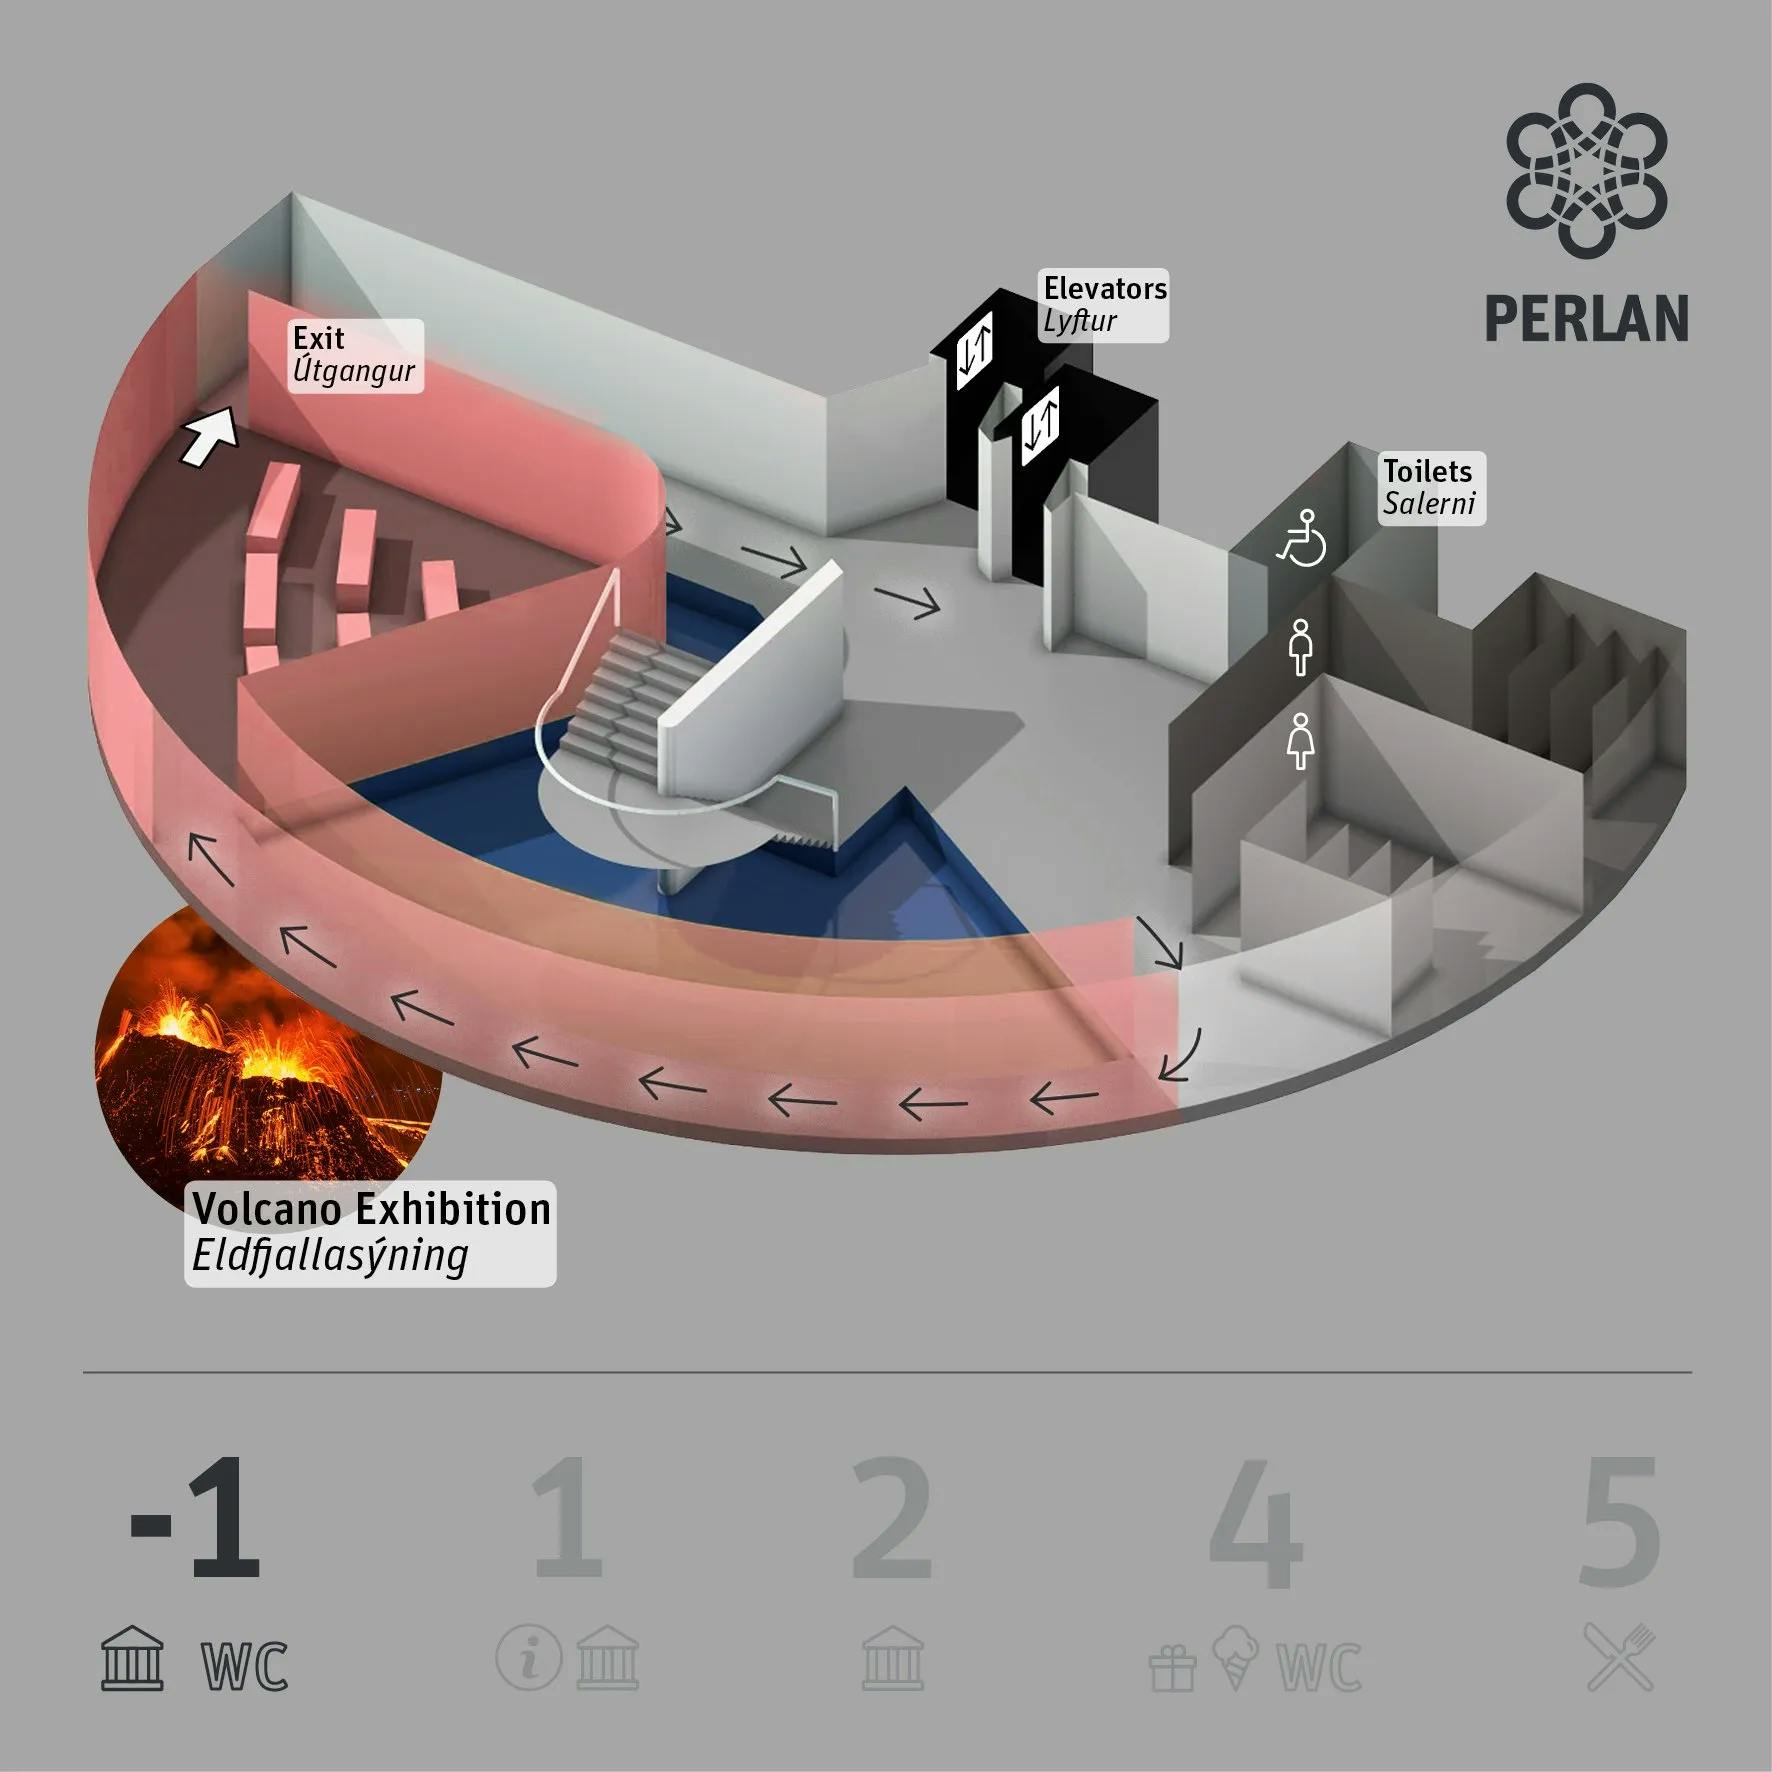 Map of Perlan basement